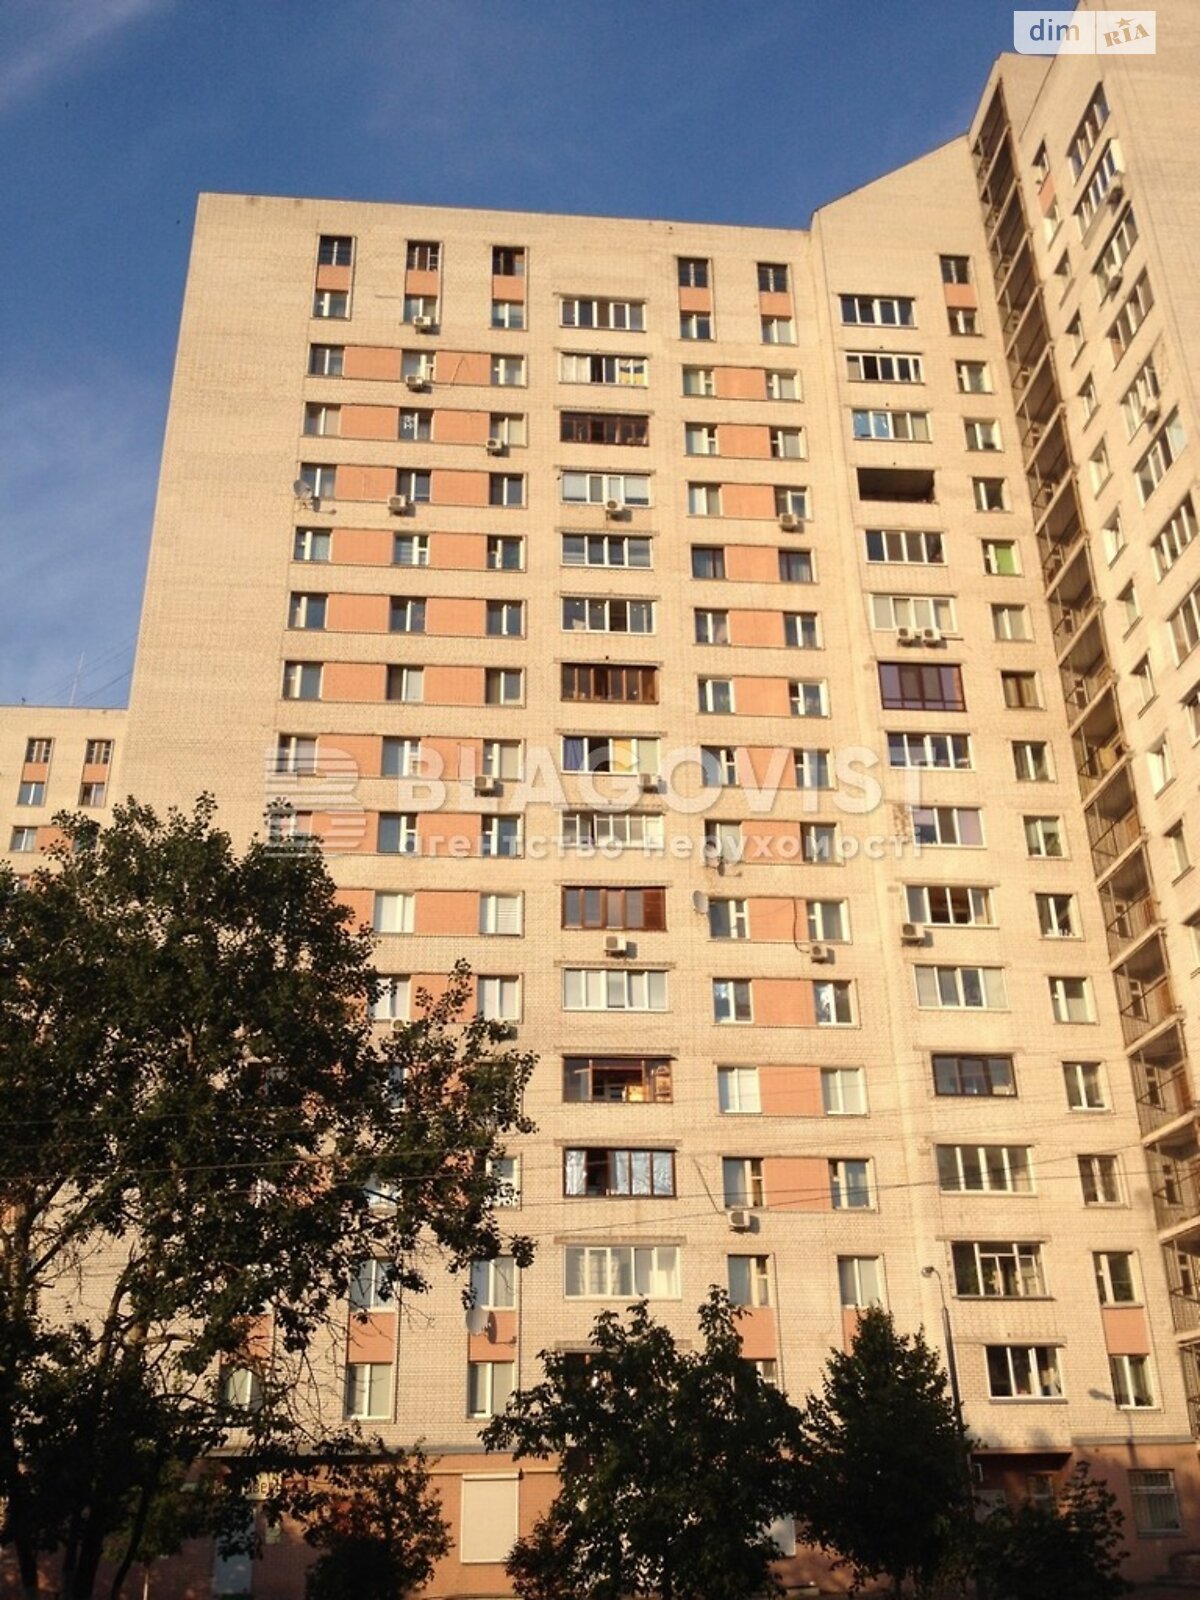 Продажа трехкомнатной квартиры в Киеве, на ул. Василия Верховинца 10, район Святошинский фото 1